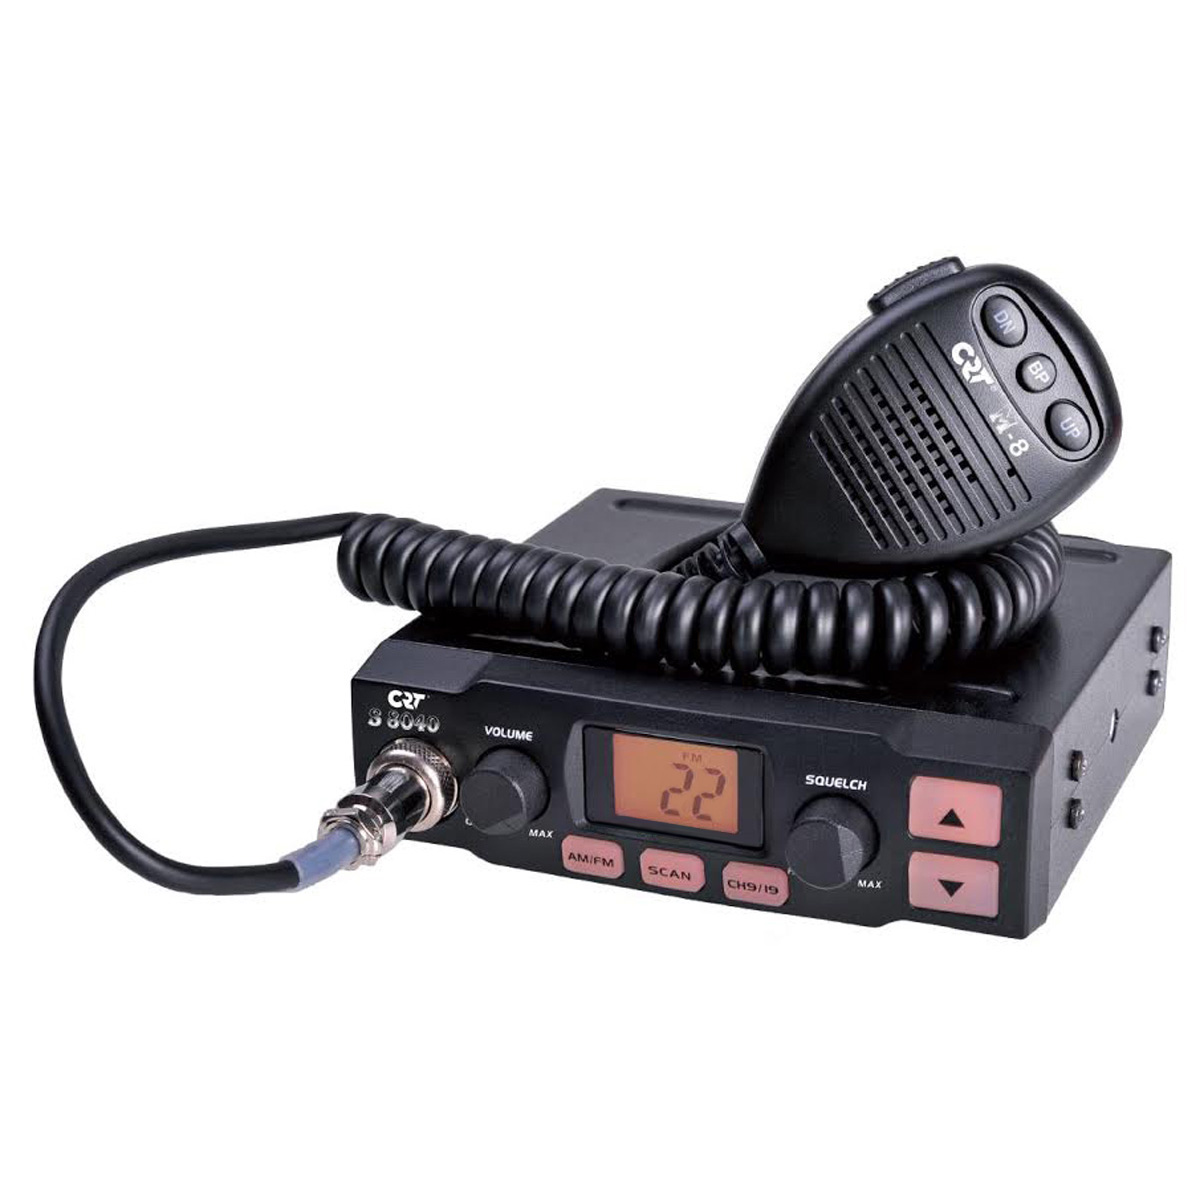 Statie radio CB CRT S 8040, 4W, 12V, Scan, ASQ, AM-FM